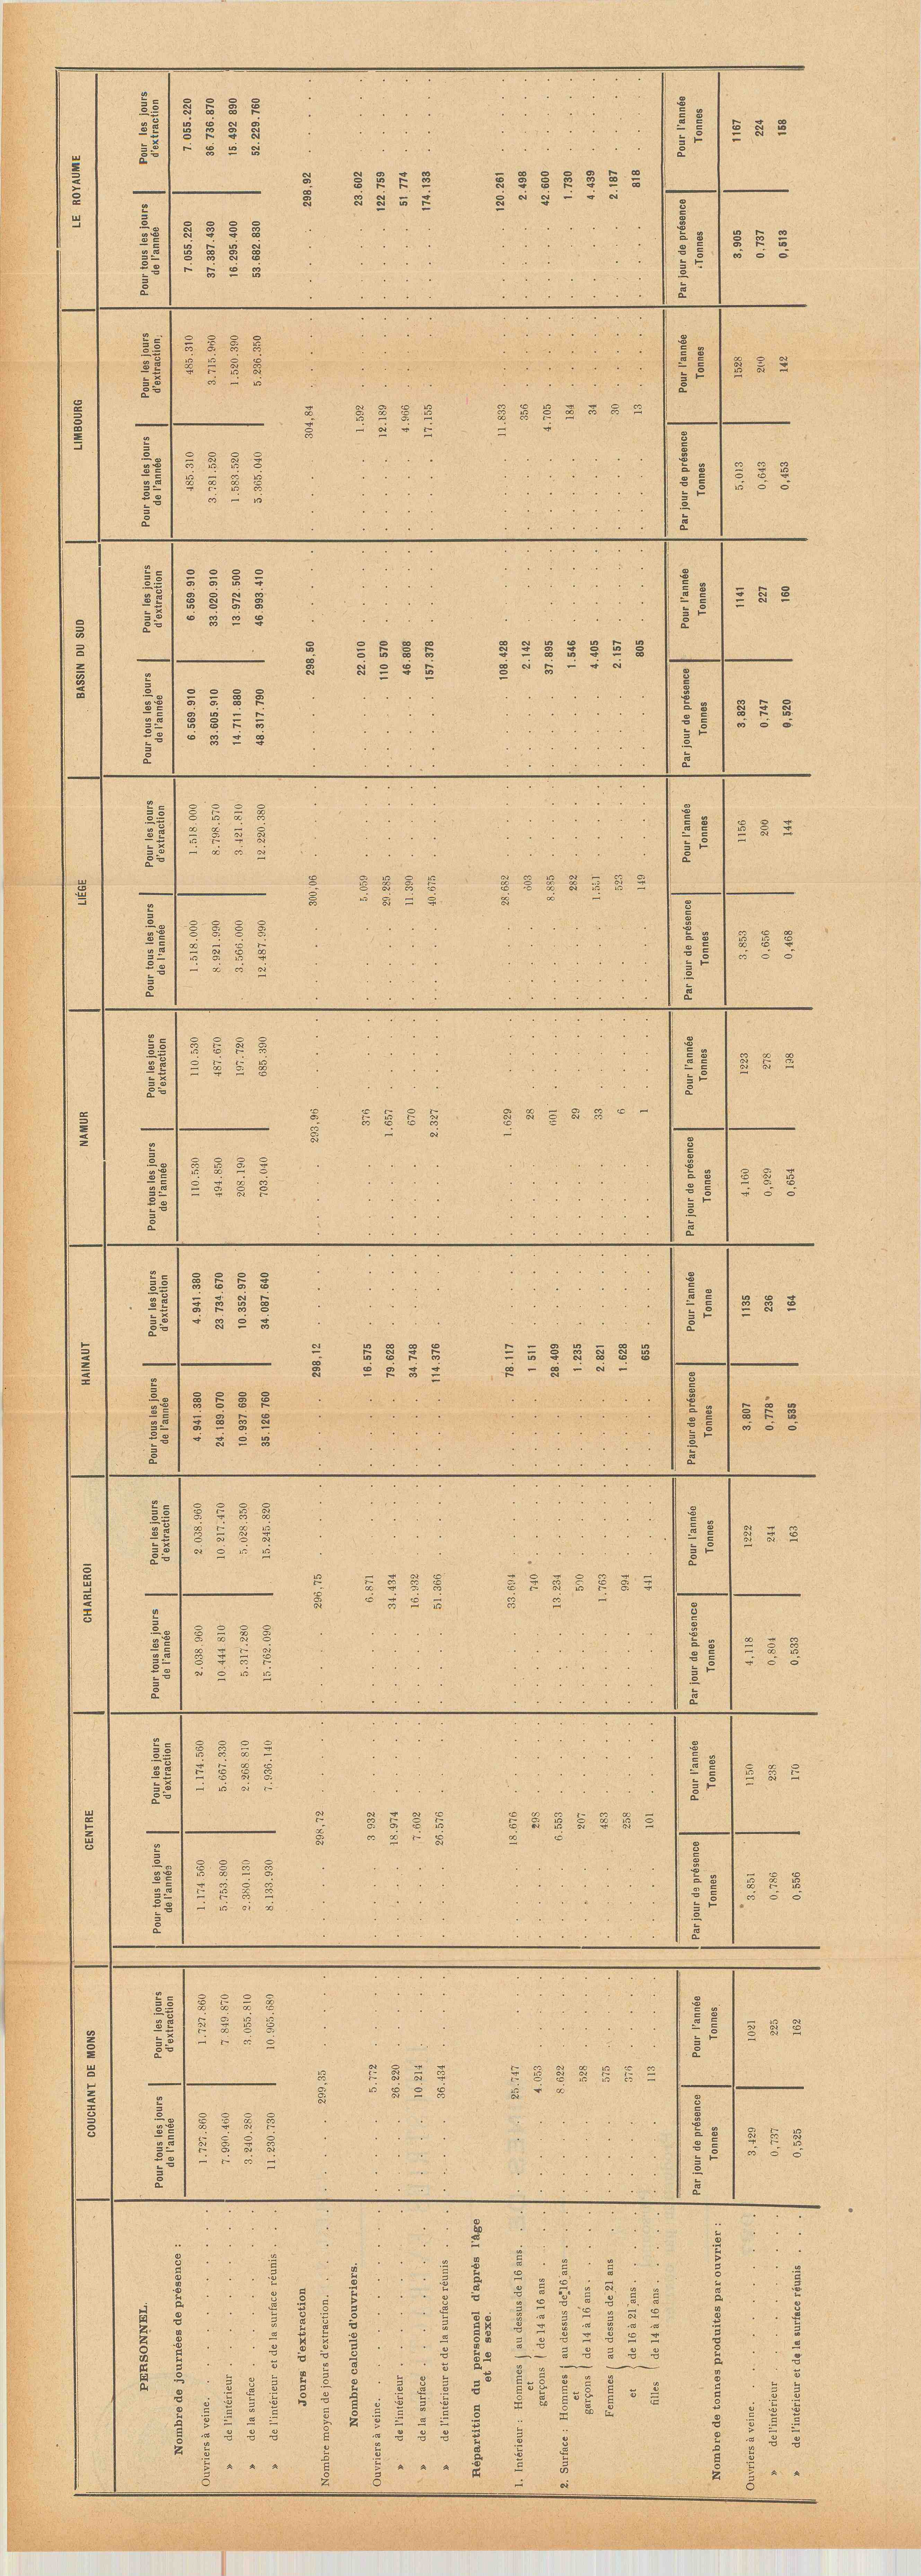 1928 800 7 tab.jpg